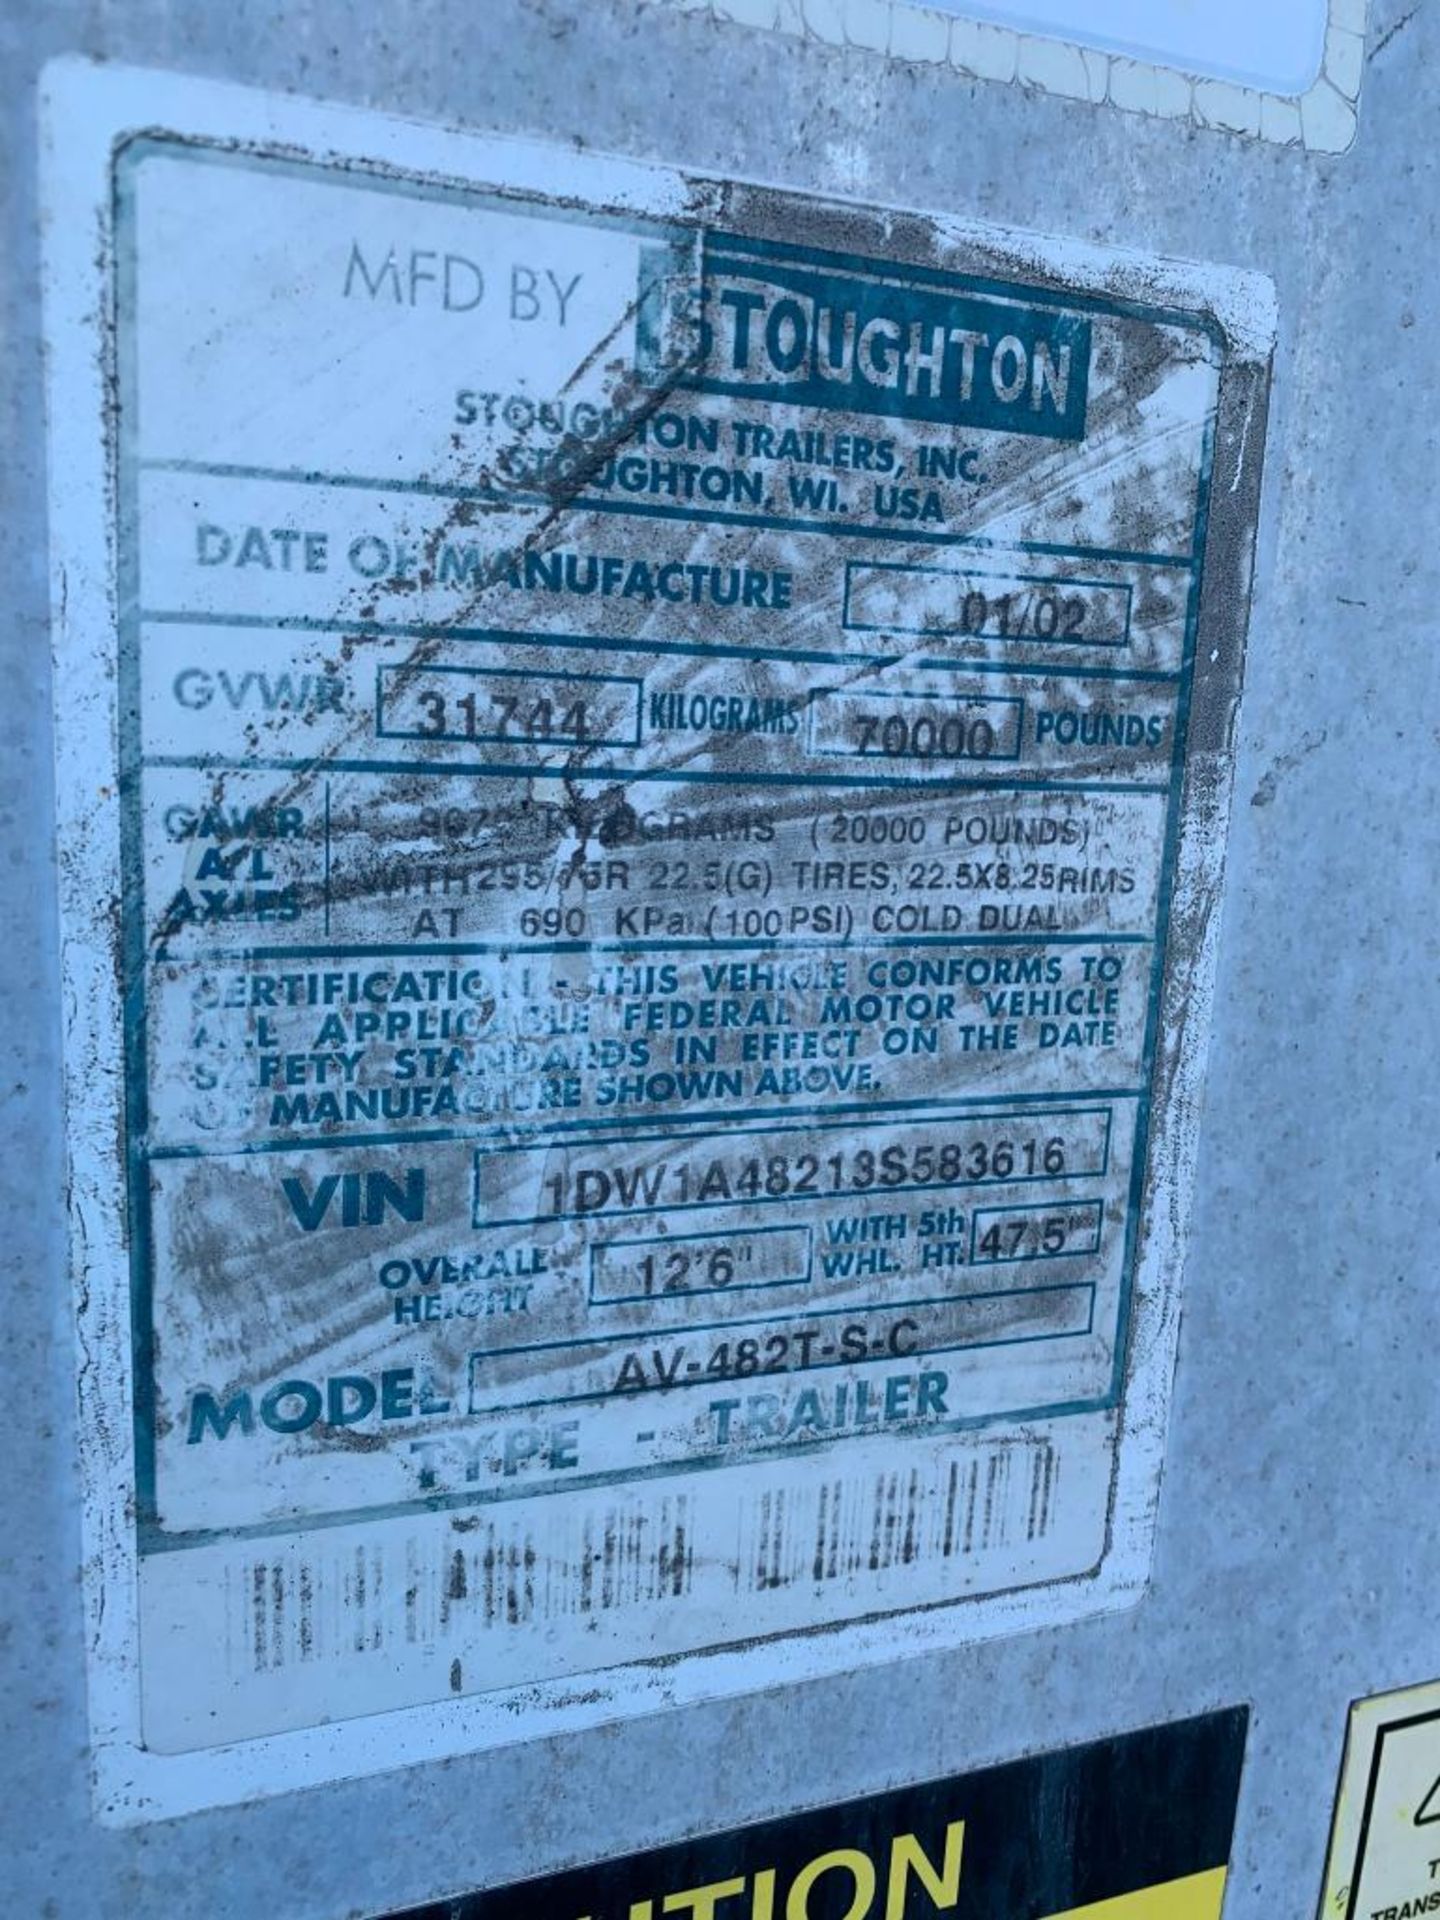 2003 (1616) Stoughton 48' Dry Van Trailer, VIN 1DW1A482135583616 - Image 5 of 5